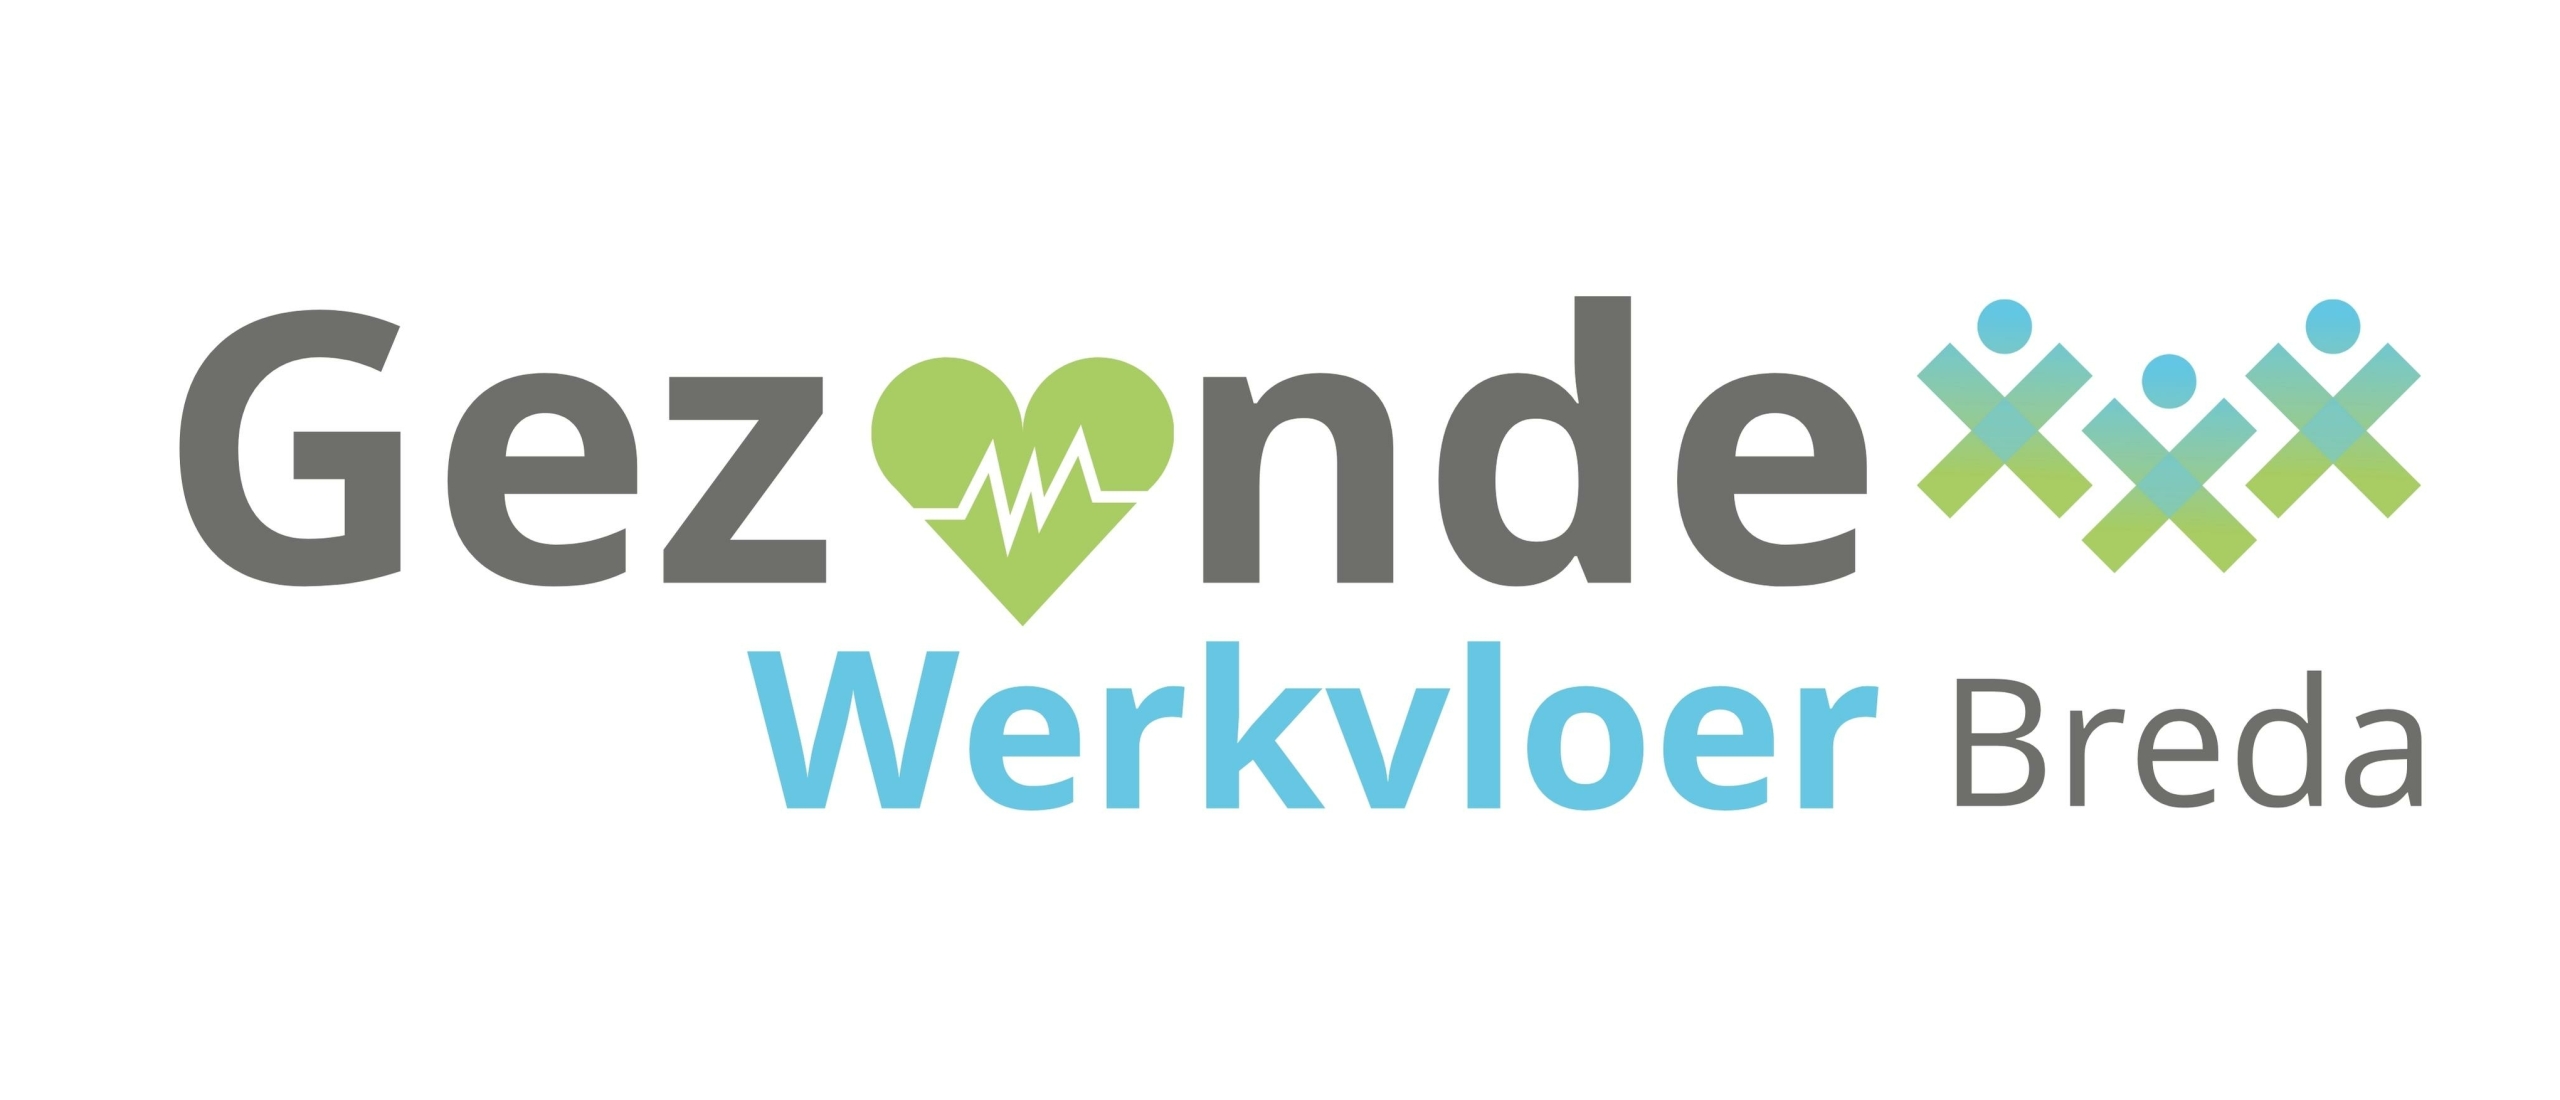 Lancering website Gezonde Werkvloer Breda